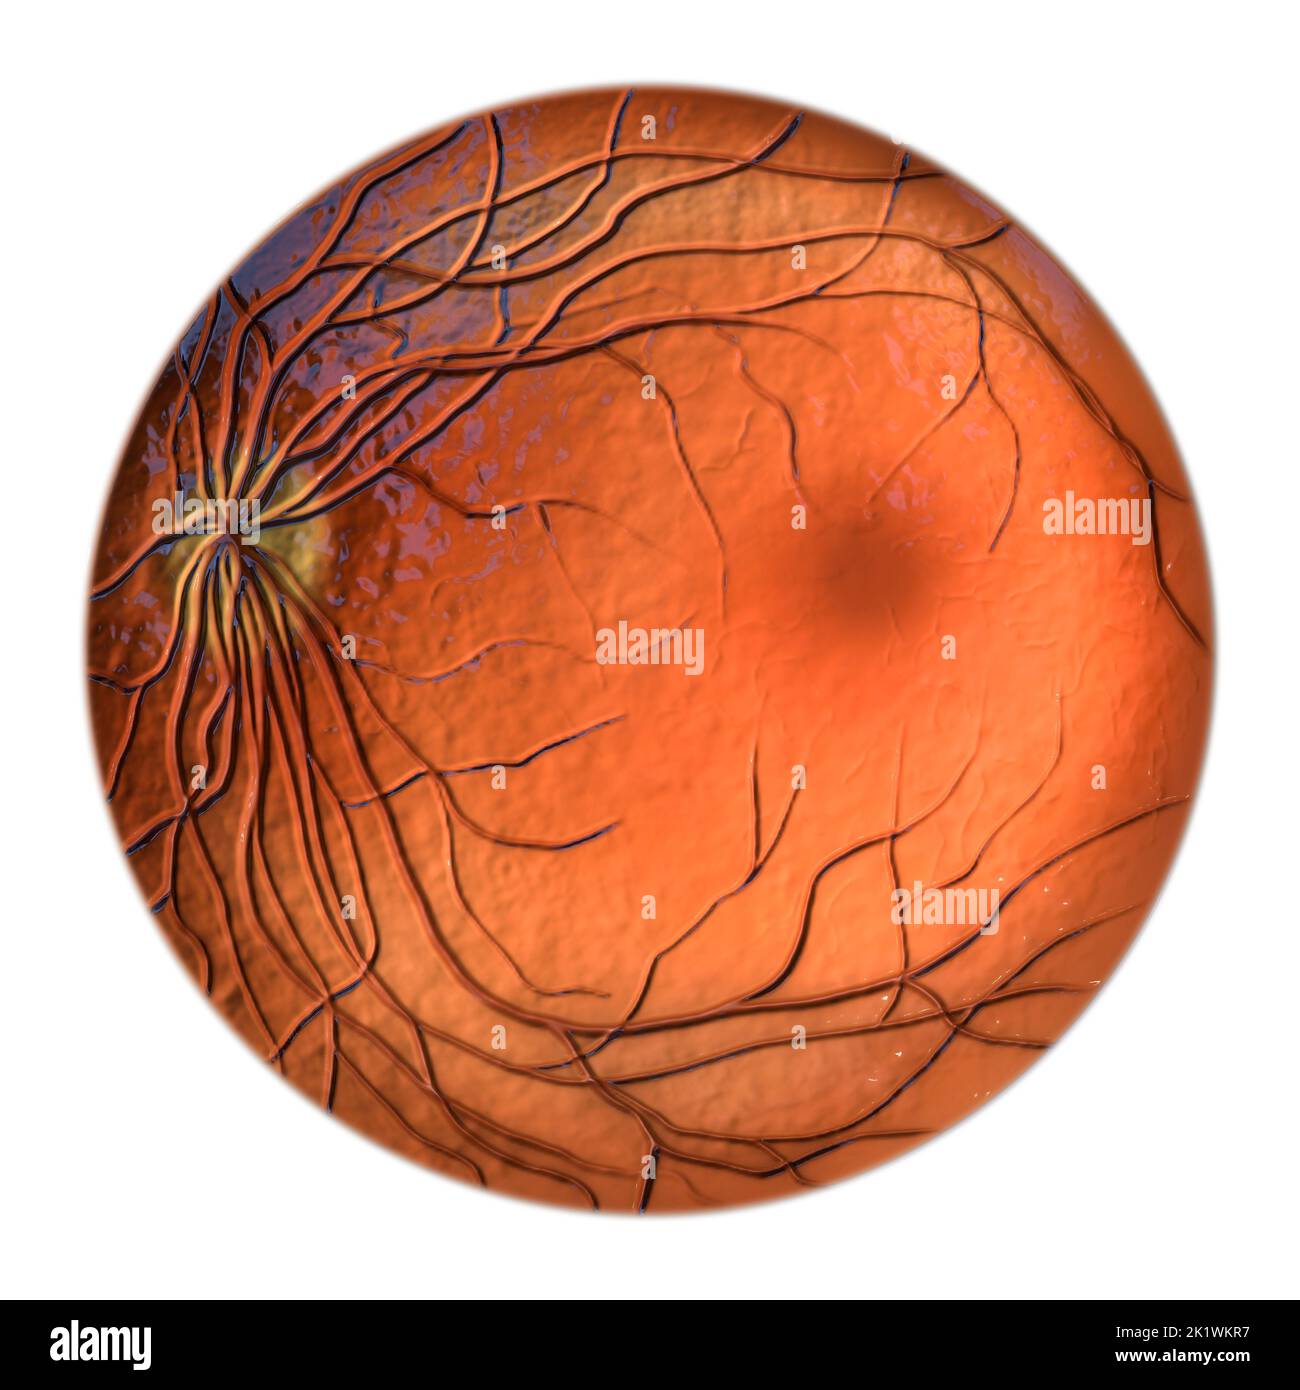 Healthy retina, Stock Photo